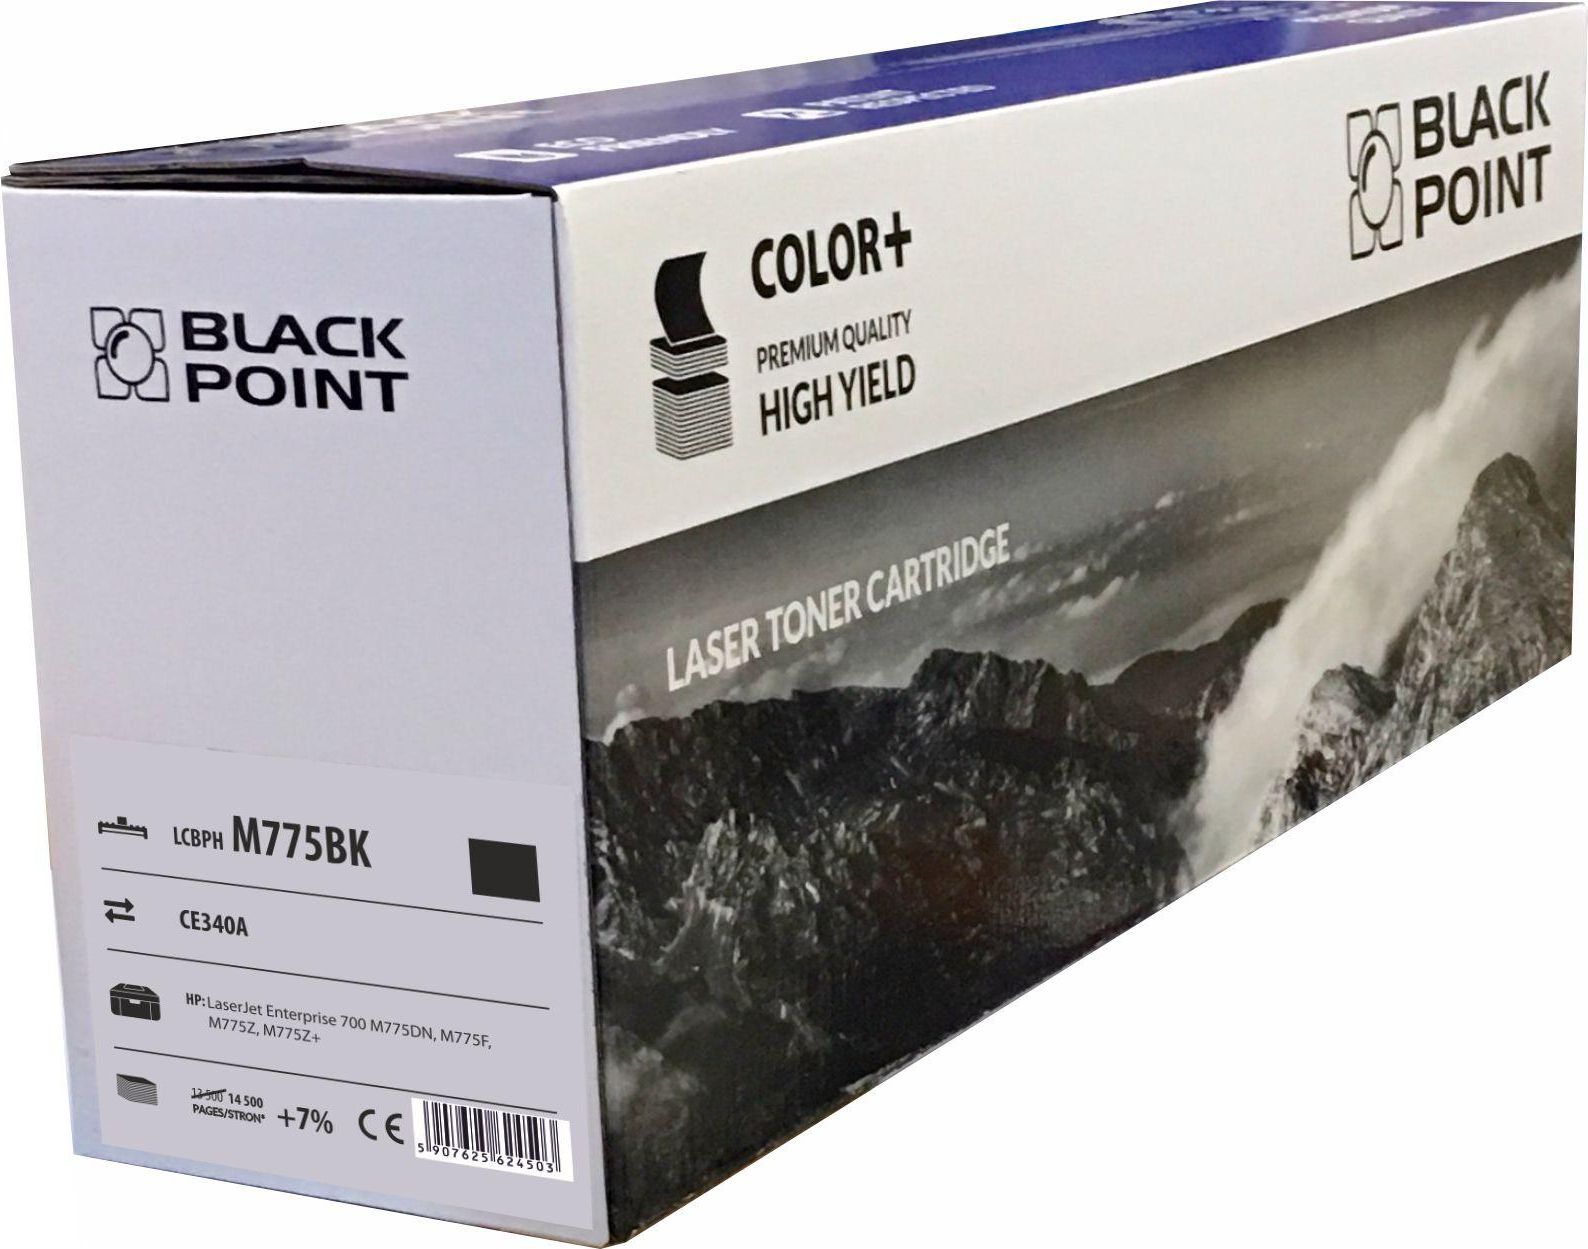 LCBPM775BK toner negru (CE340A)